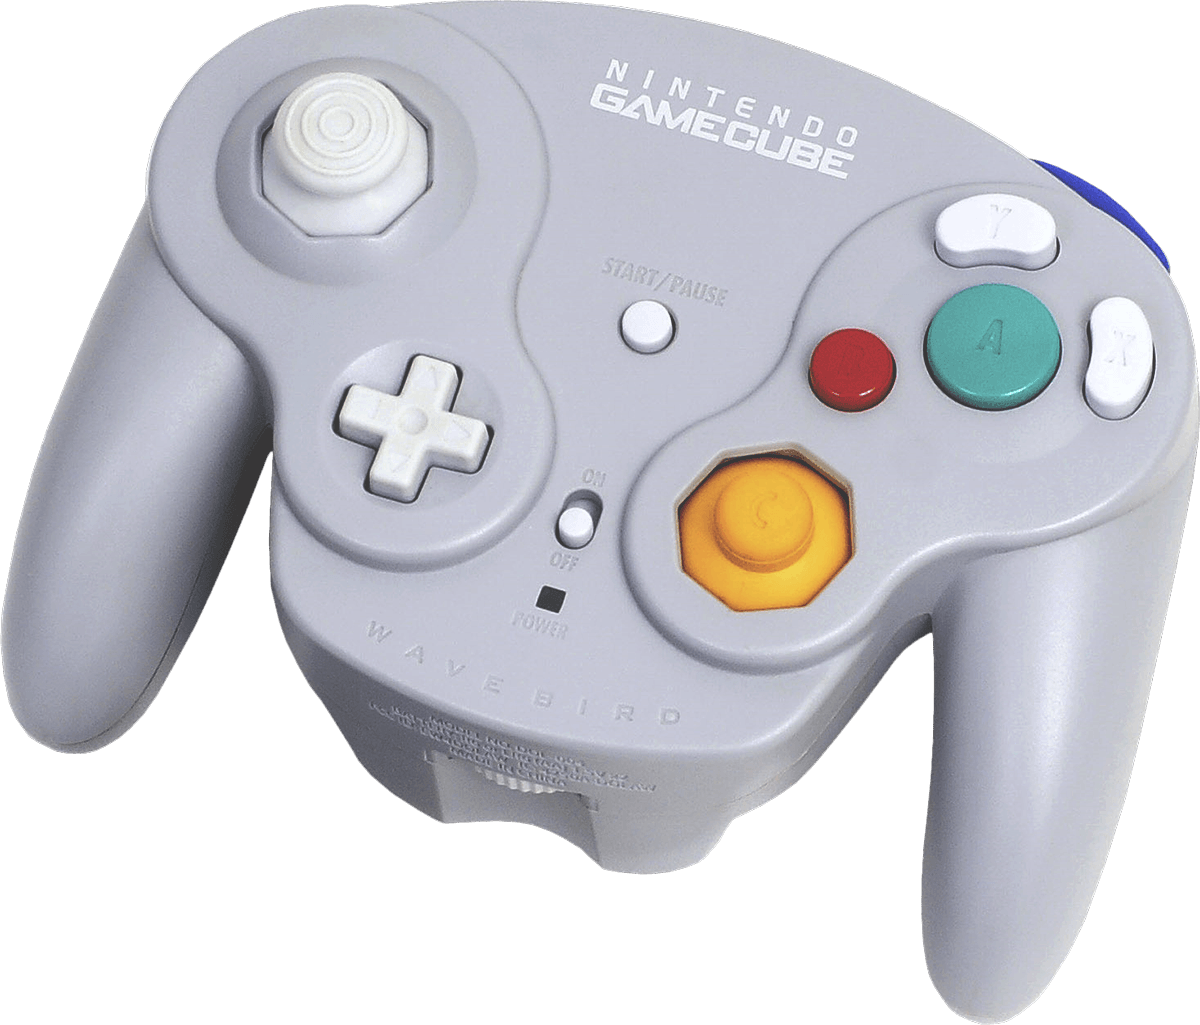 Nintendo GameCube WaveBird Wireles Controller - Grey (NGC) | Nintendo GameCube